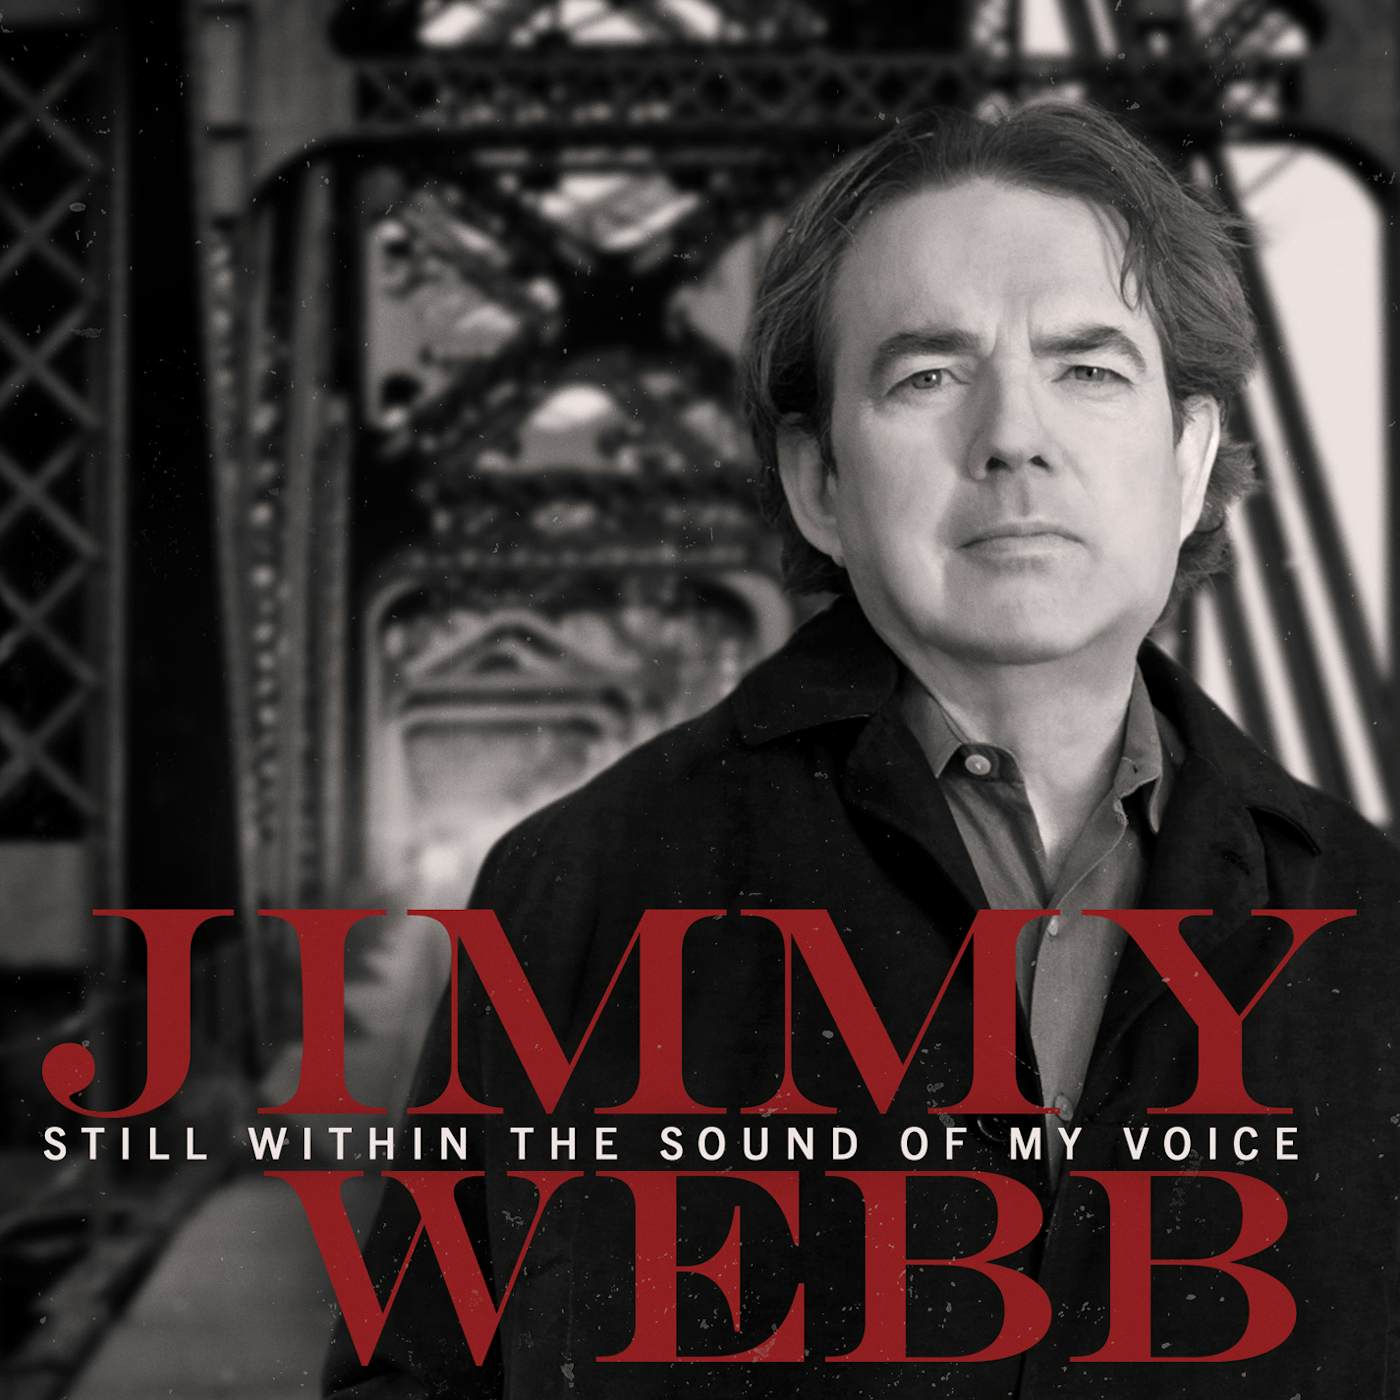 Jimmy Webb STILL WITHIN THE SOUND OF MY VOICE CD